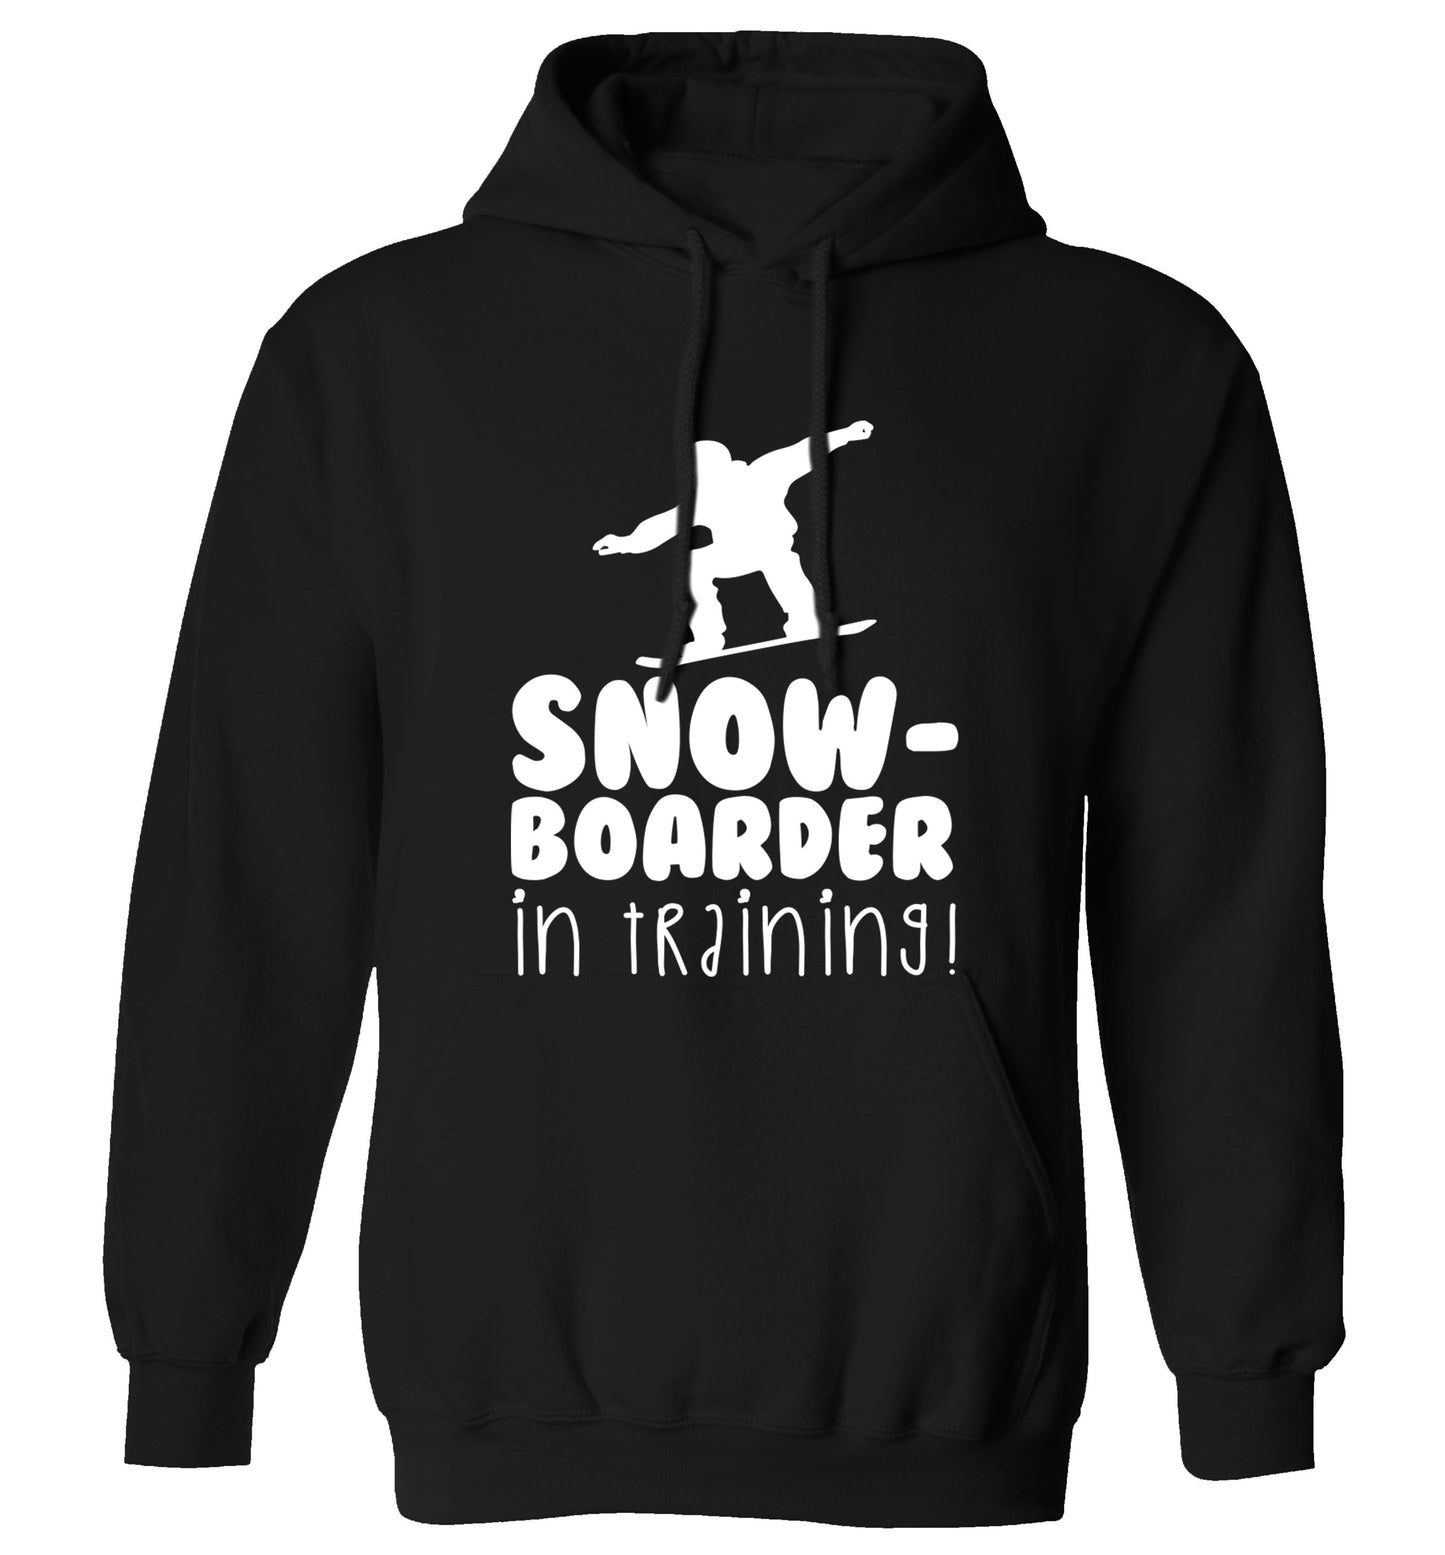 Snowboarder in training adults unisex black hoodie 2XL